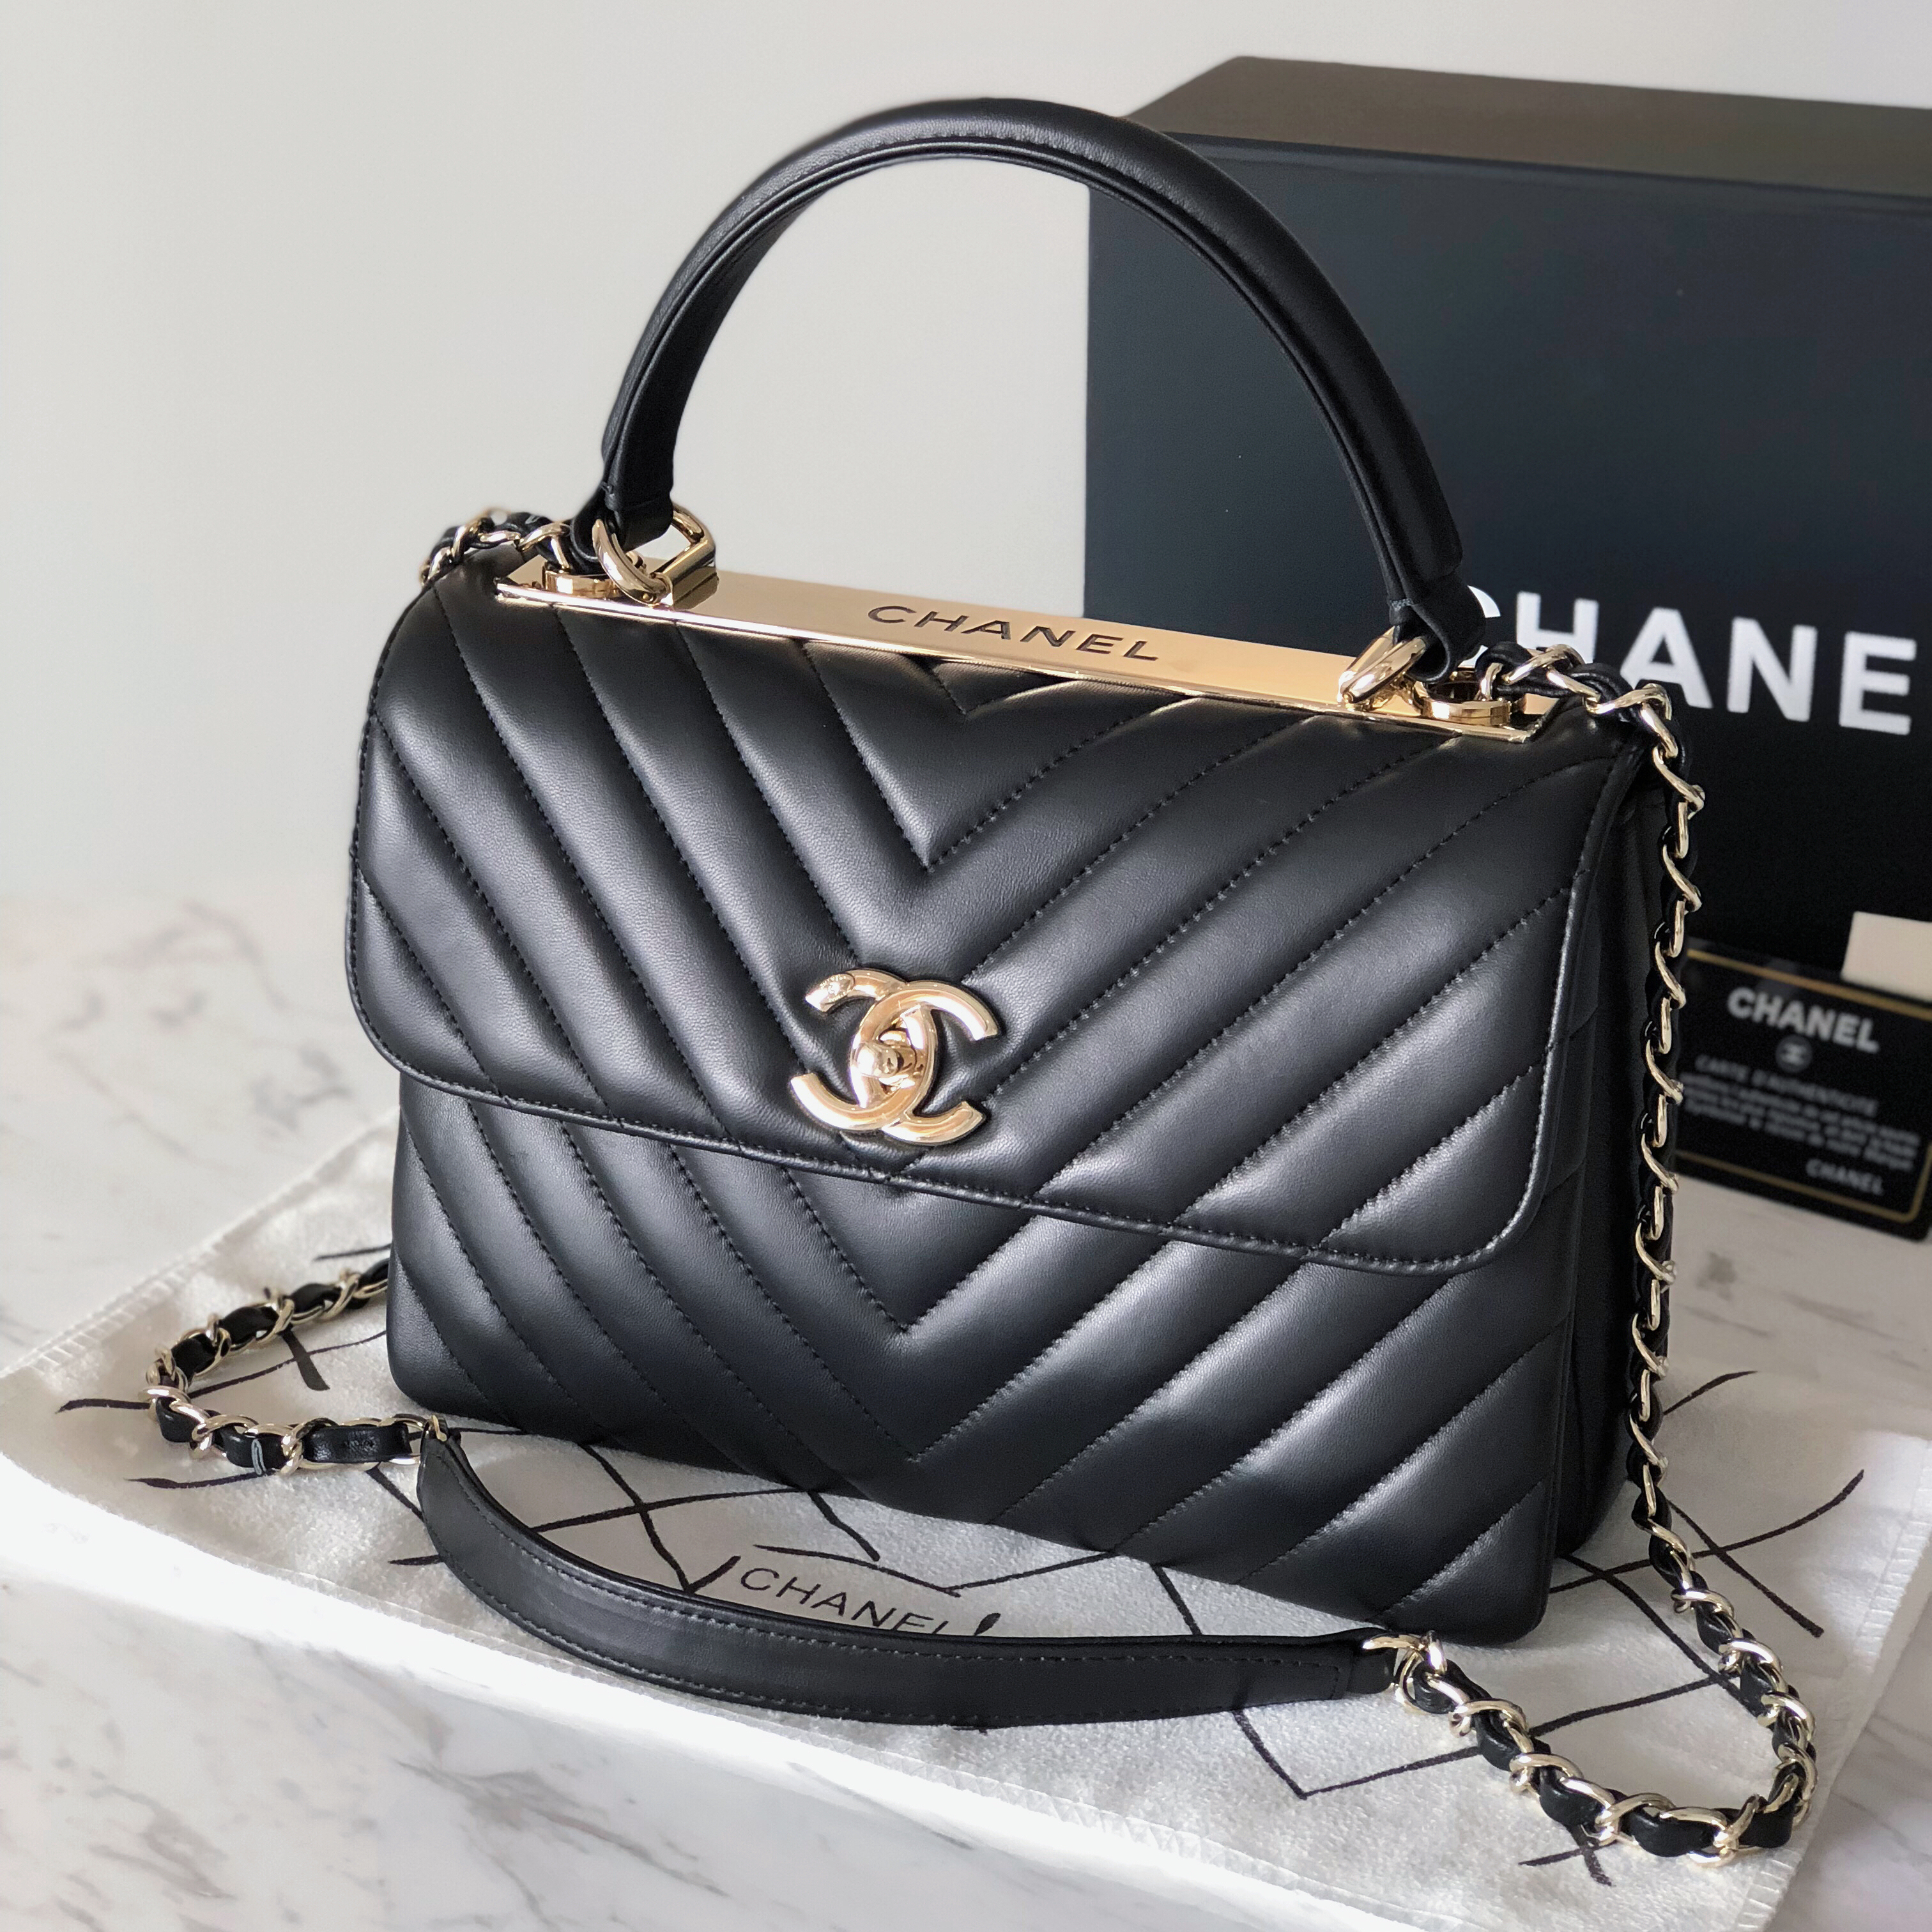 Copy Of Chanel Classic Flap Bag Small Chanel Boy Bag Black Designer Women Cheap Chanel Coco Crossbody Bag Purse Sale Replica Handbags 1552574721640 2 